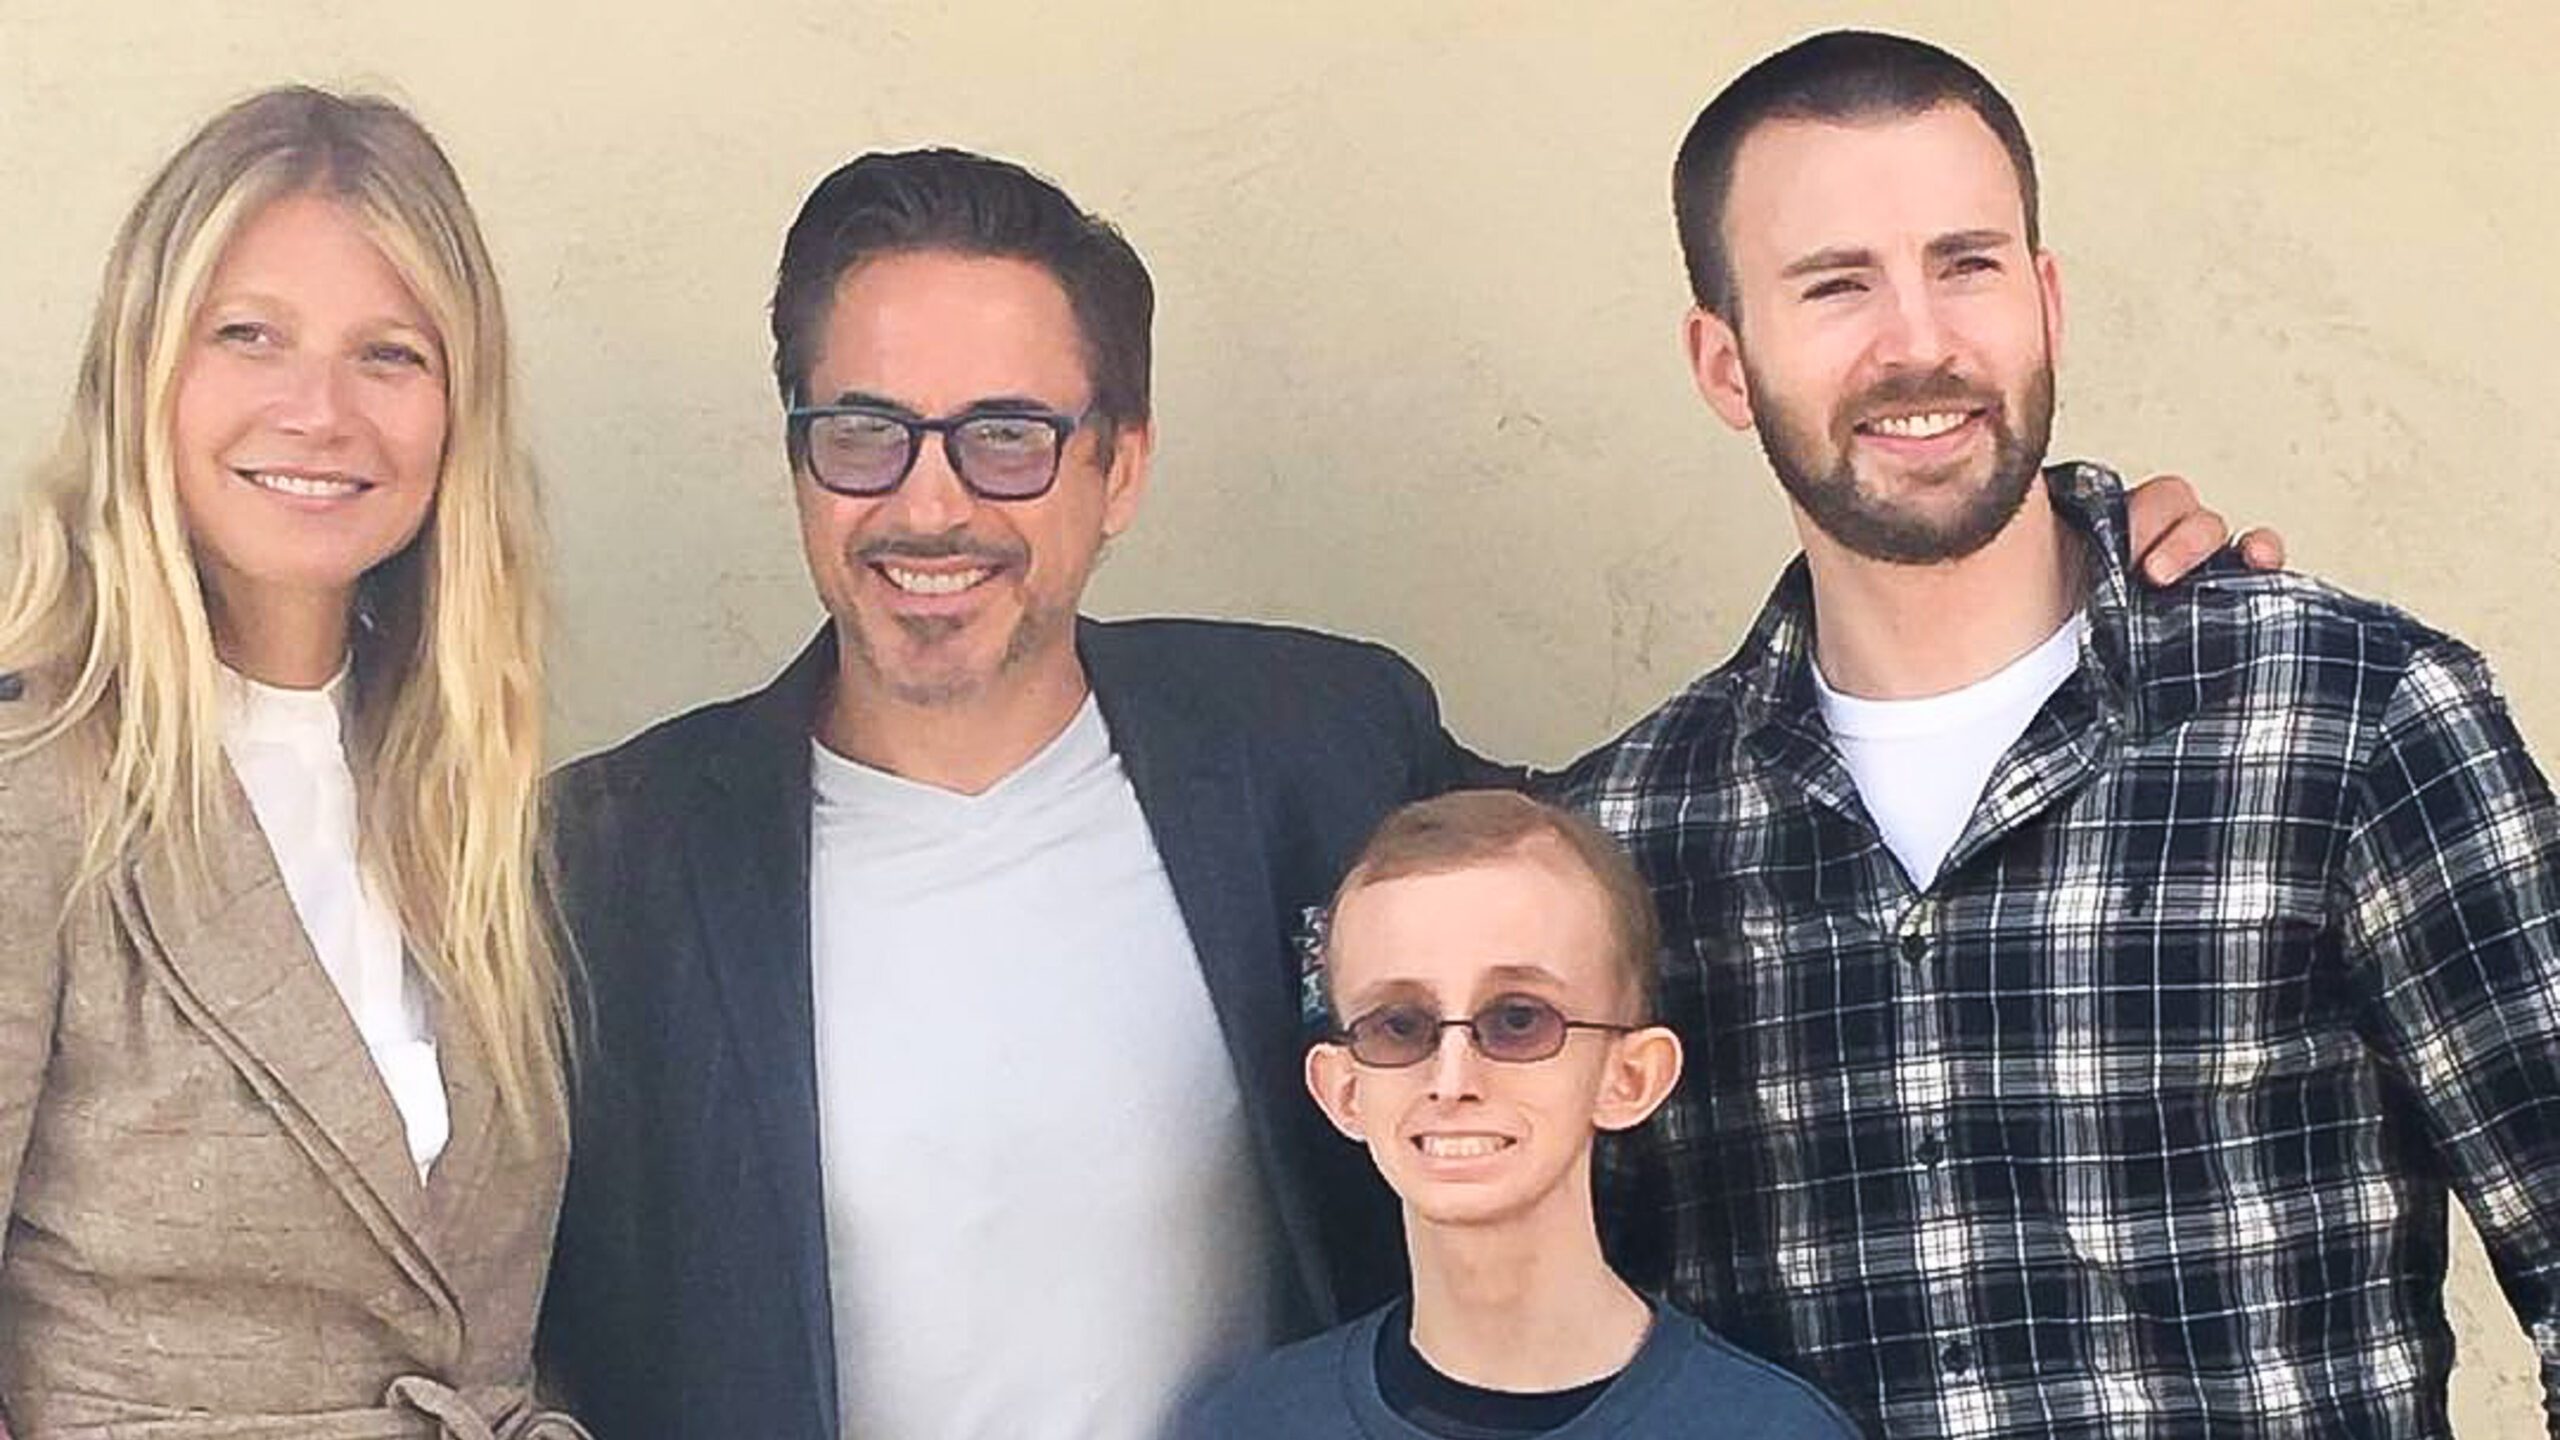 Chris Evans, Robert Downey Jr, Gwyneth Paltrow visit ‘Avengers’ fan fighting cancer